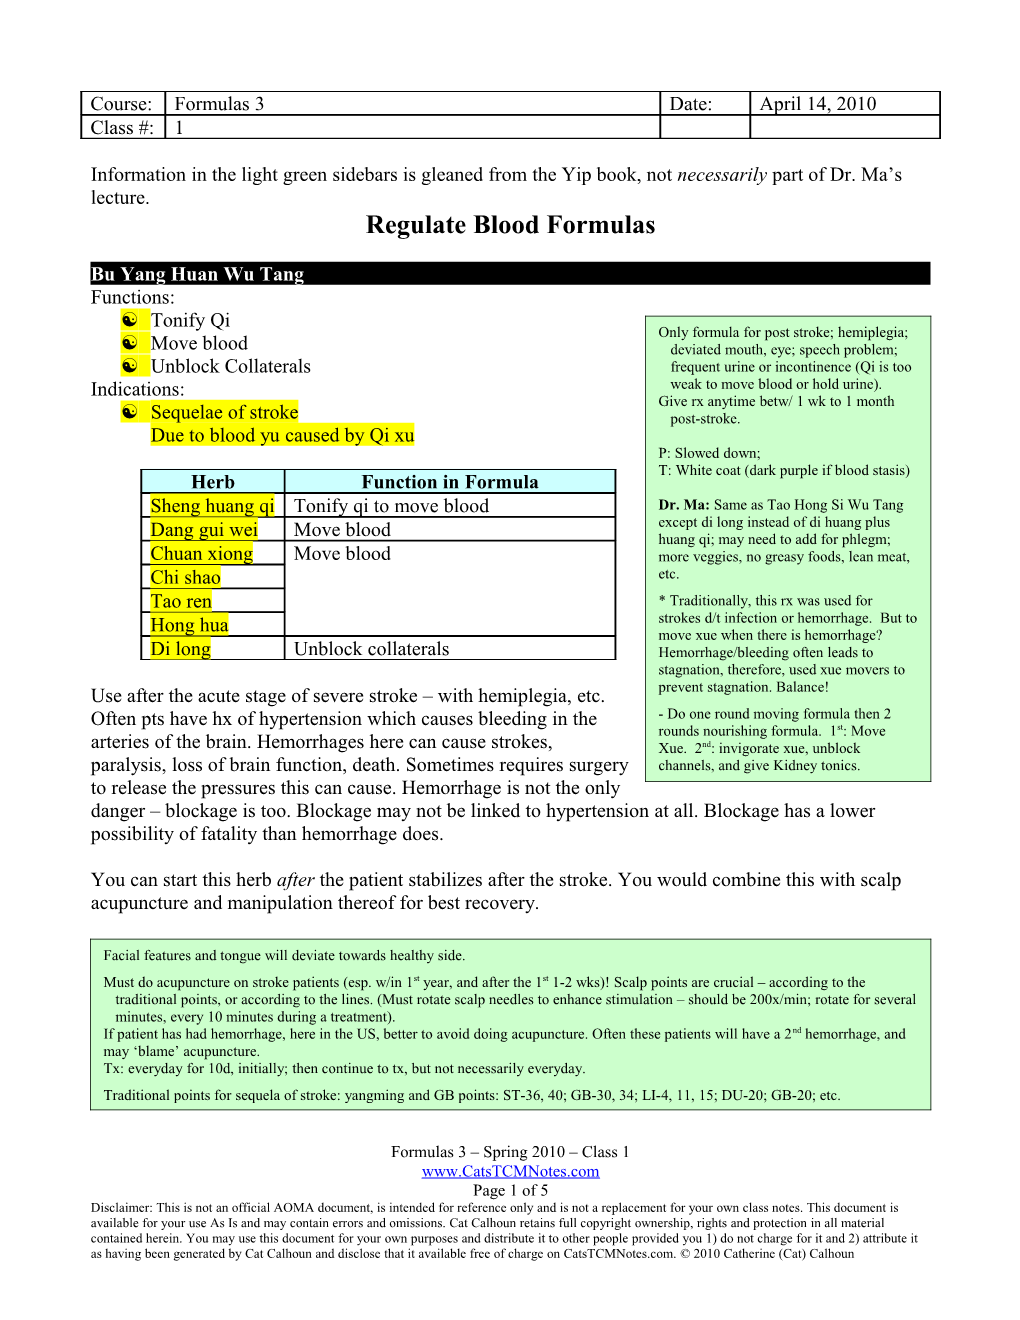 Regulate Blood Formulas